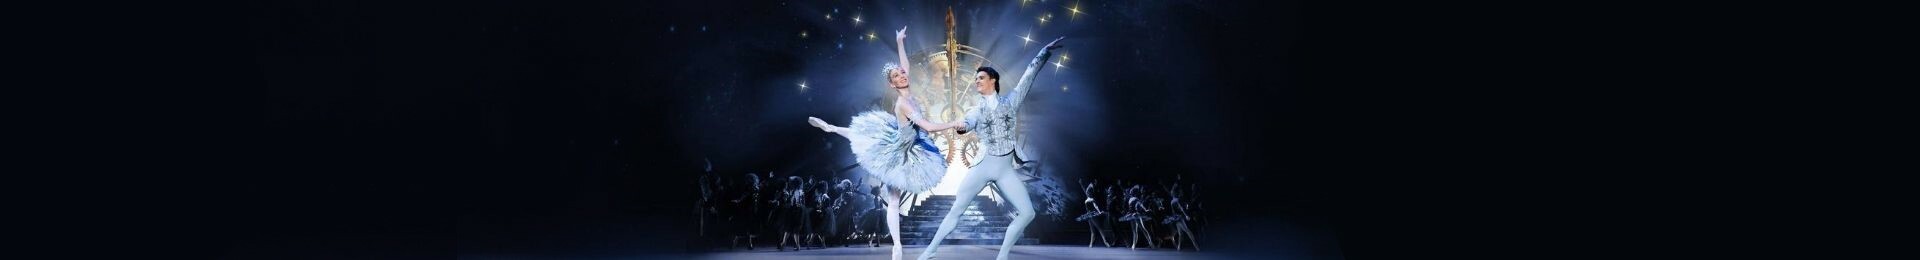 Birmingham Royal Ballet: Cinderella banner image